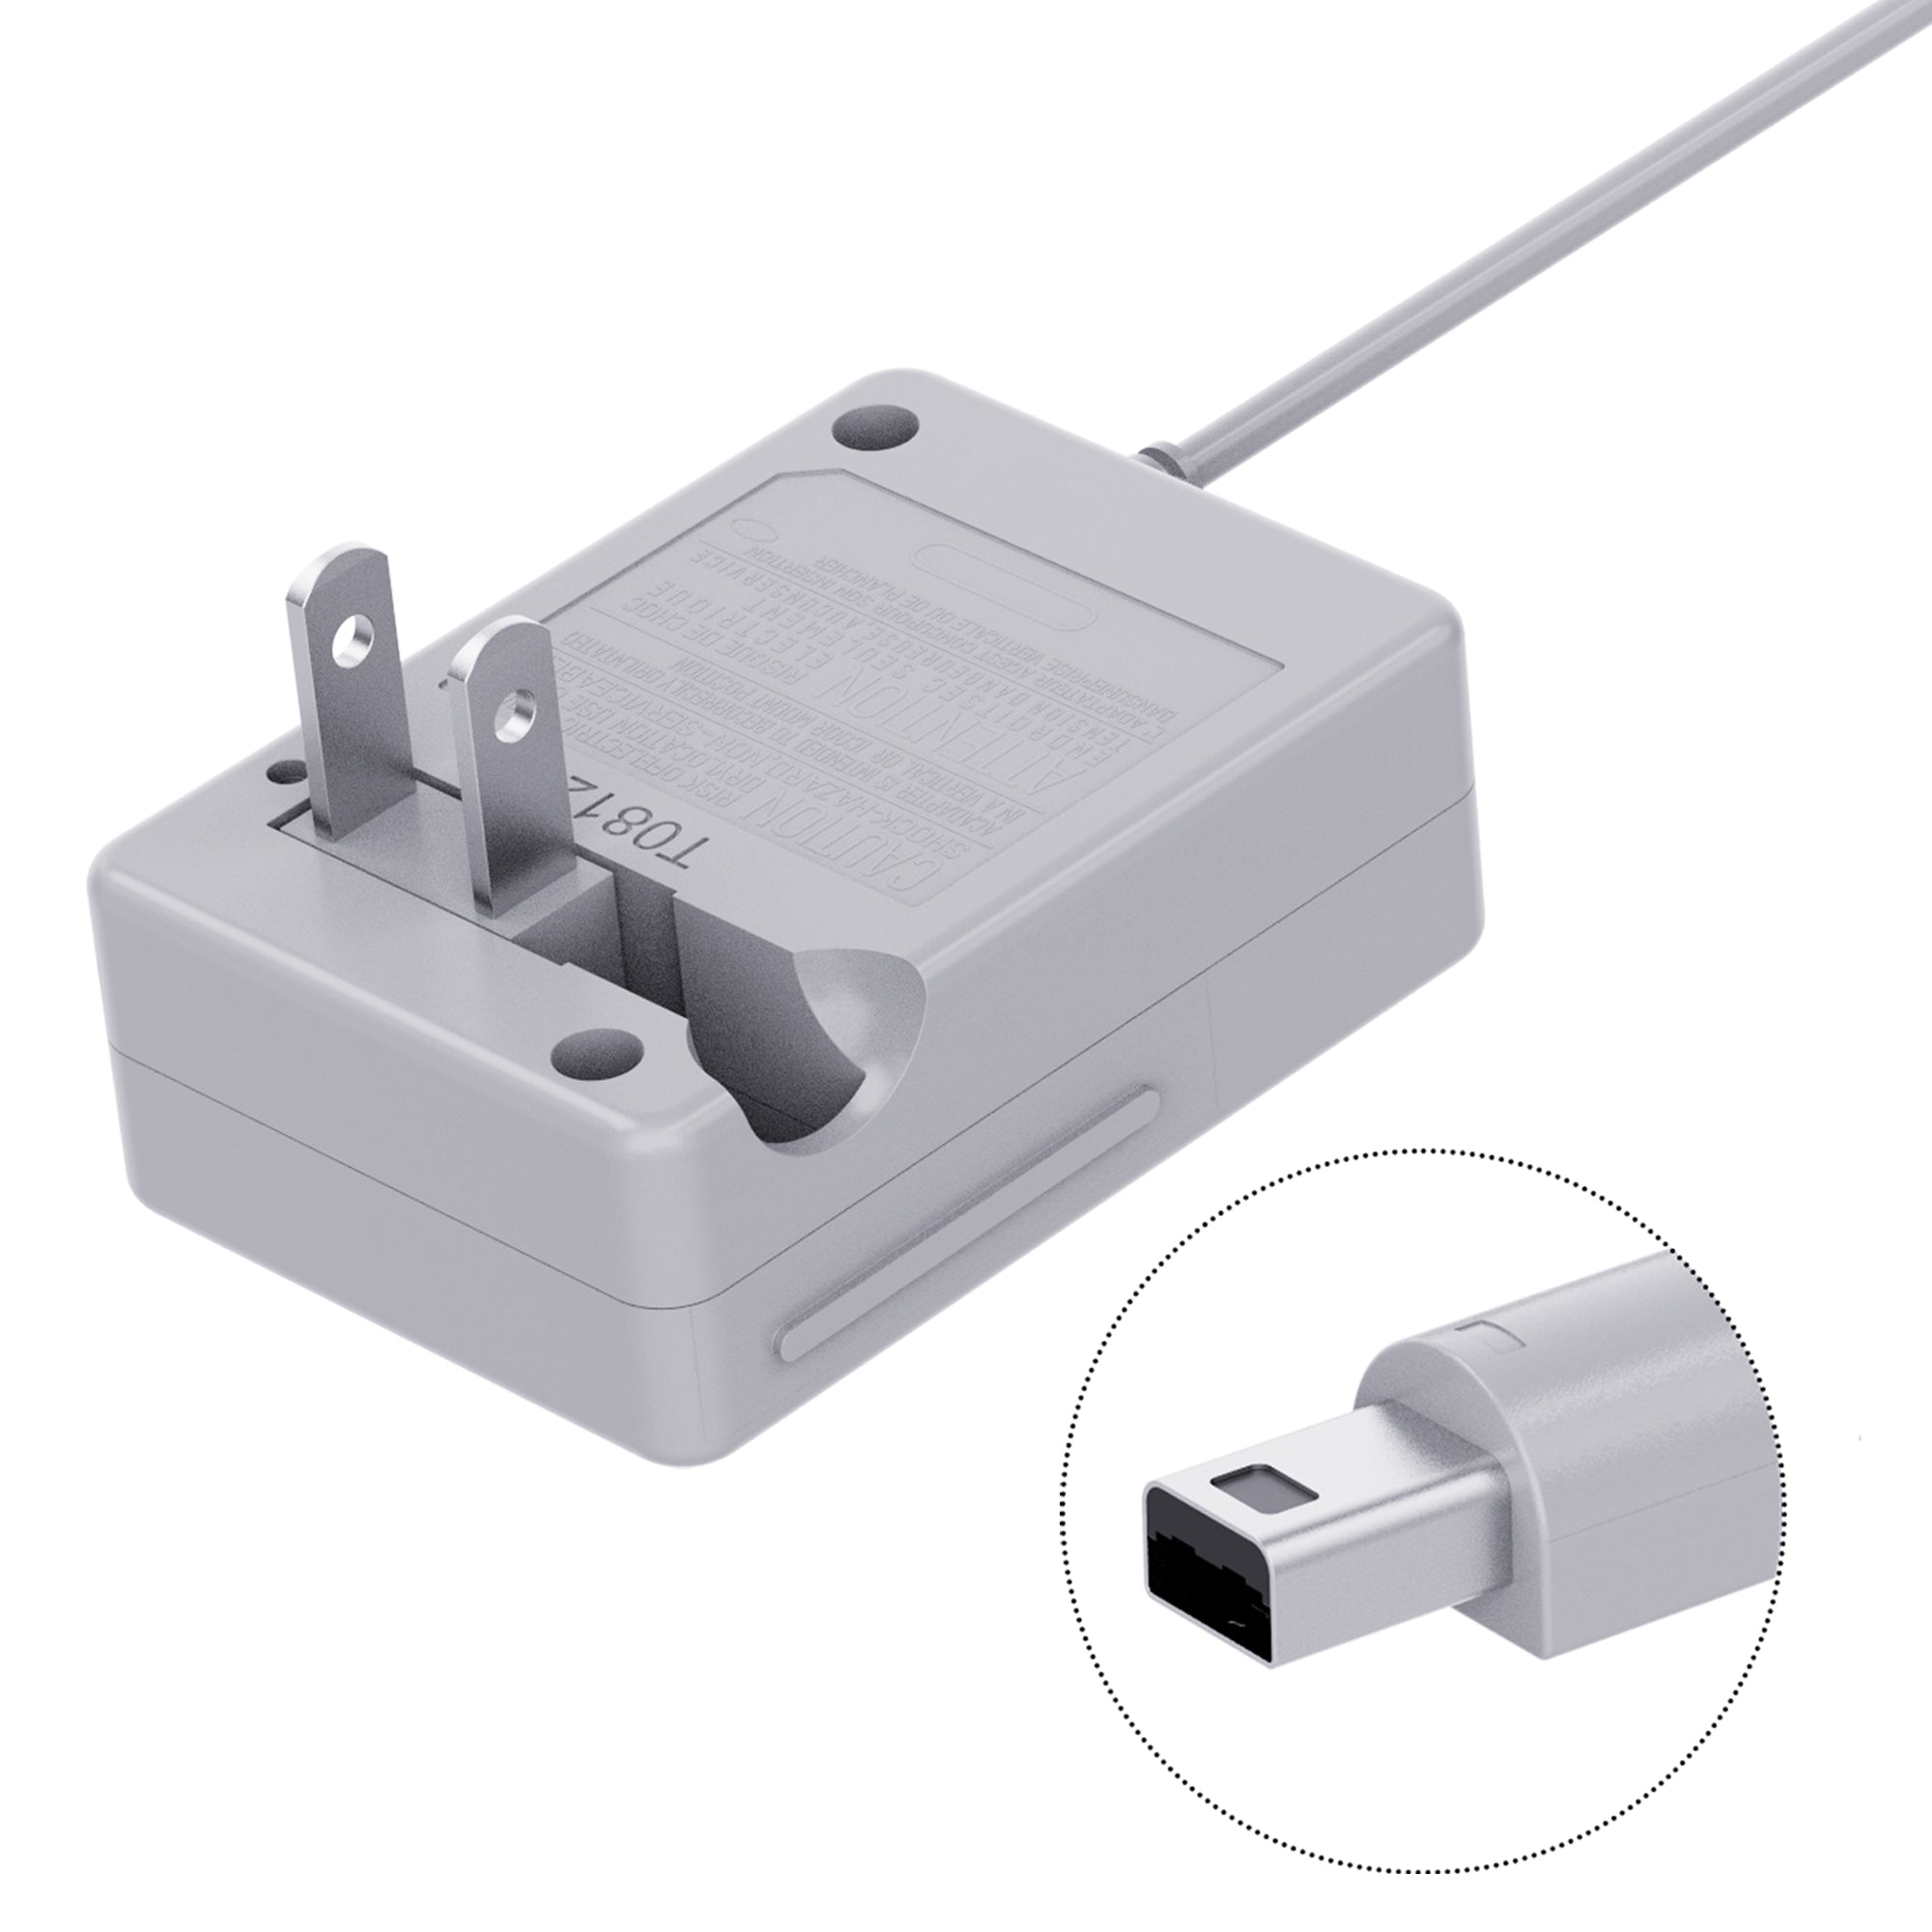 Für Nintendo 3DS / DSI / DSI XL Anschluss USB Ladekabel Adapter